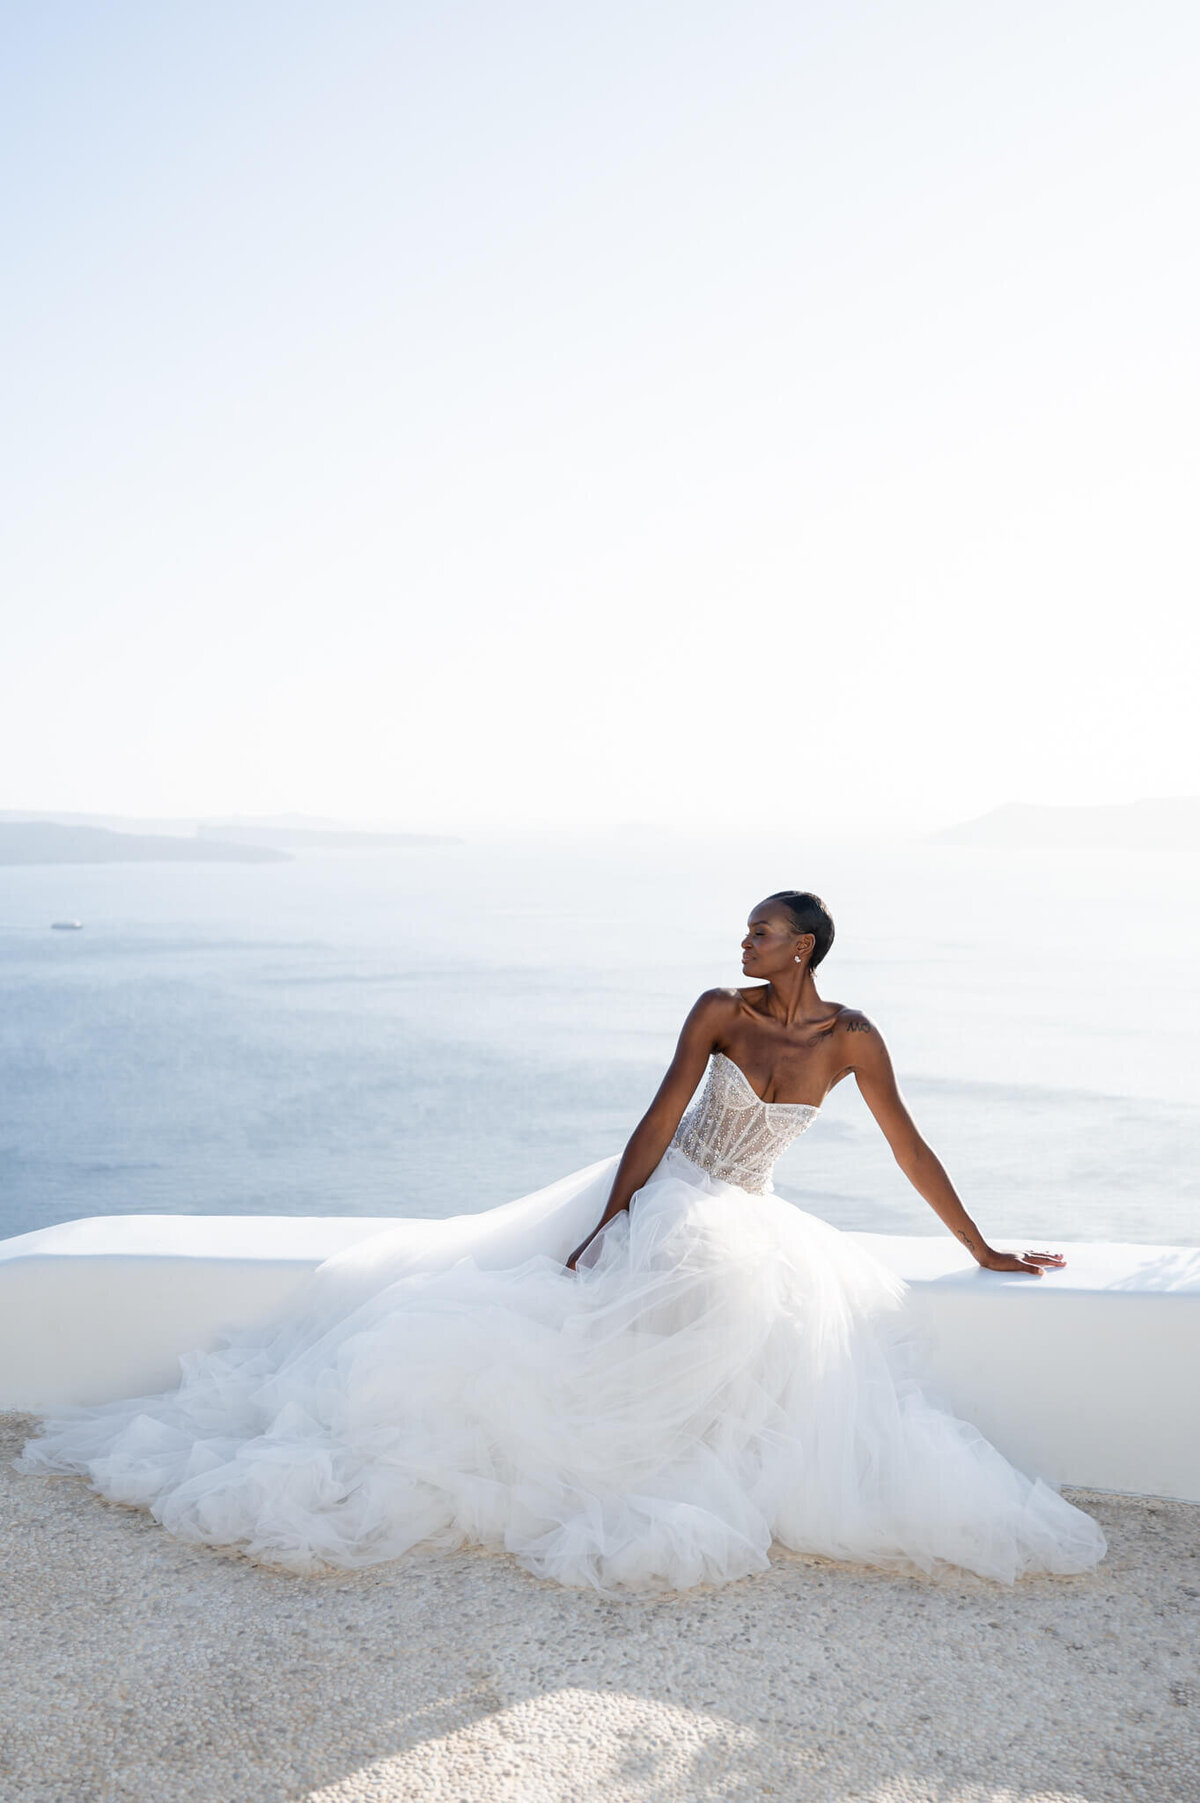 Europe Destination Wedding Photographer - Santorini Greece Wedding Photographer - Chloe Bolam -1486